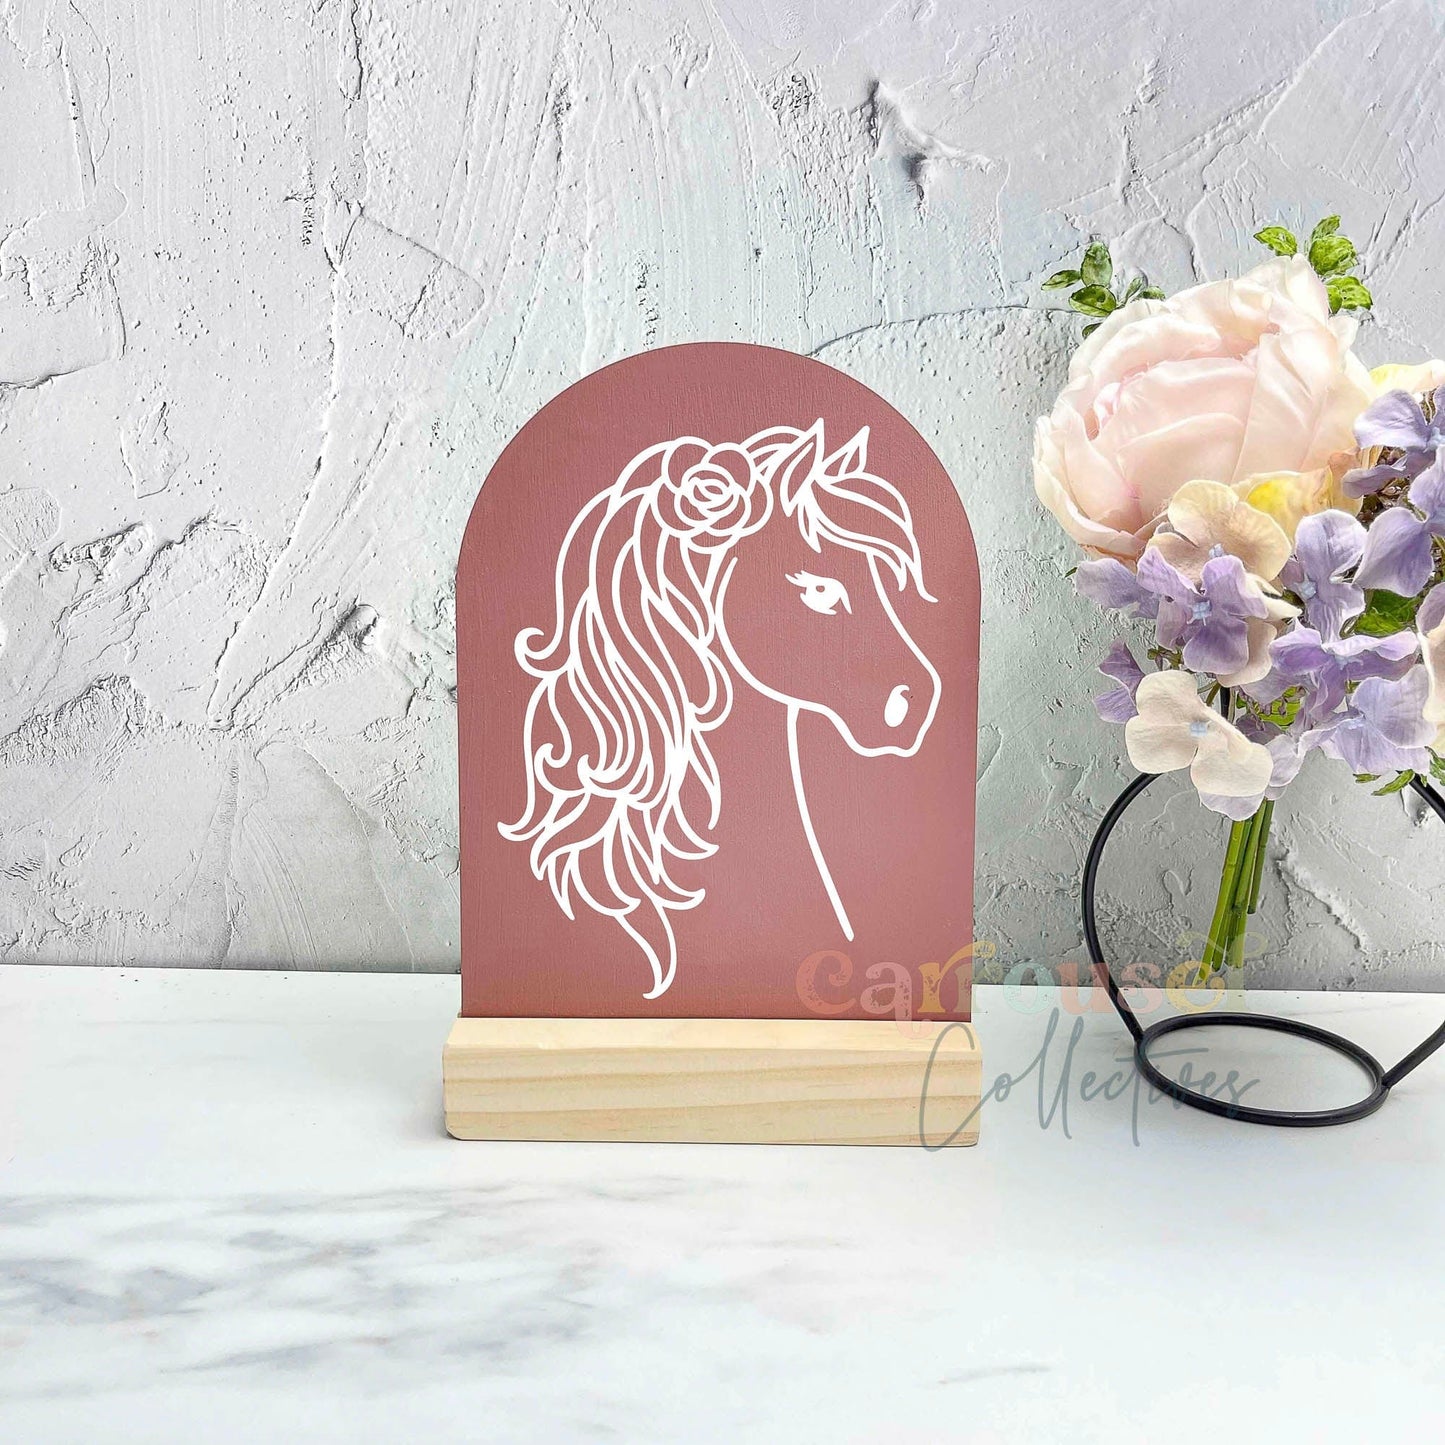 Horse line art acrylic sign, acrylic decor sign, decorative decor